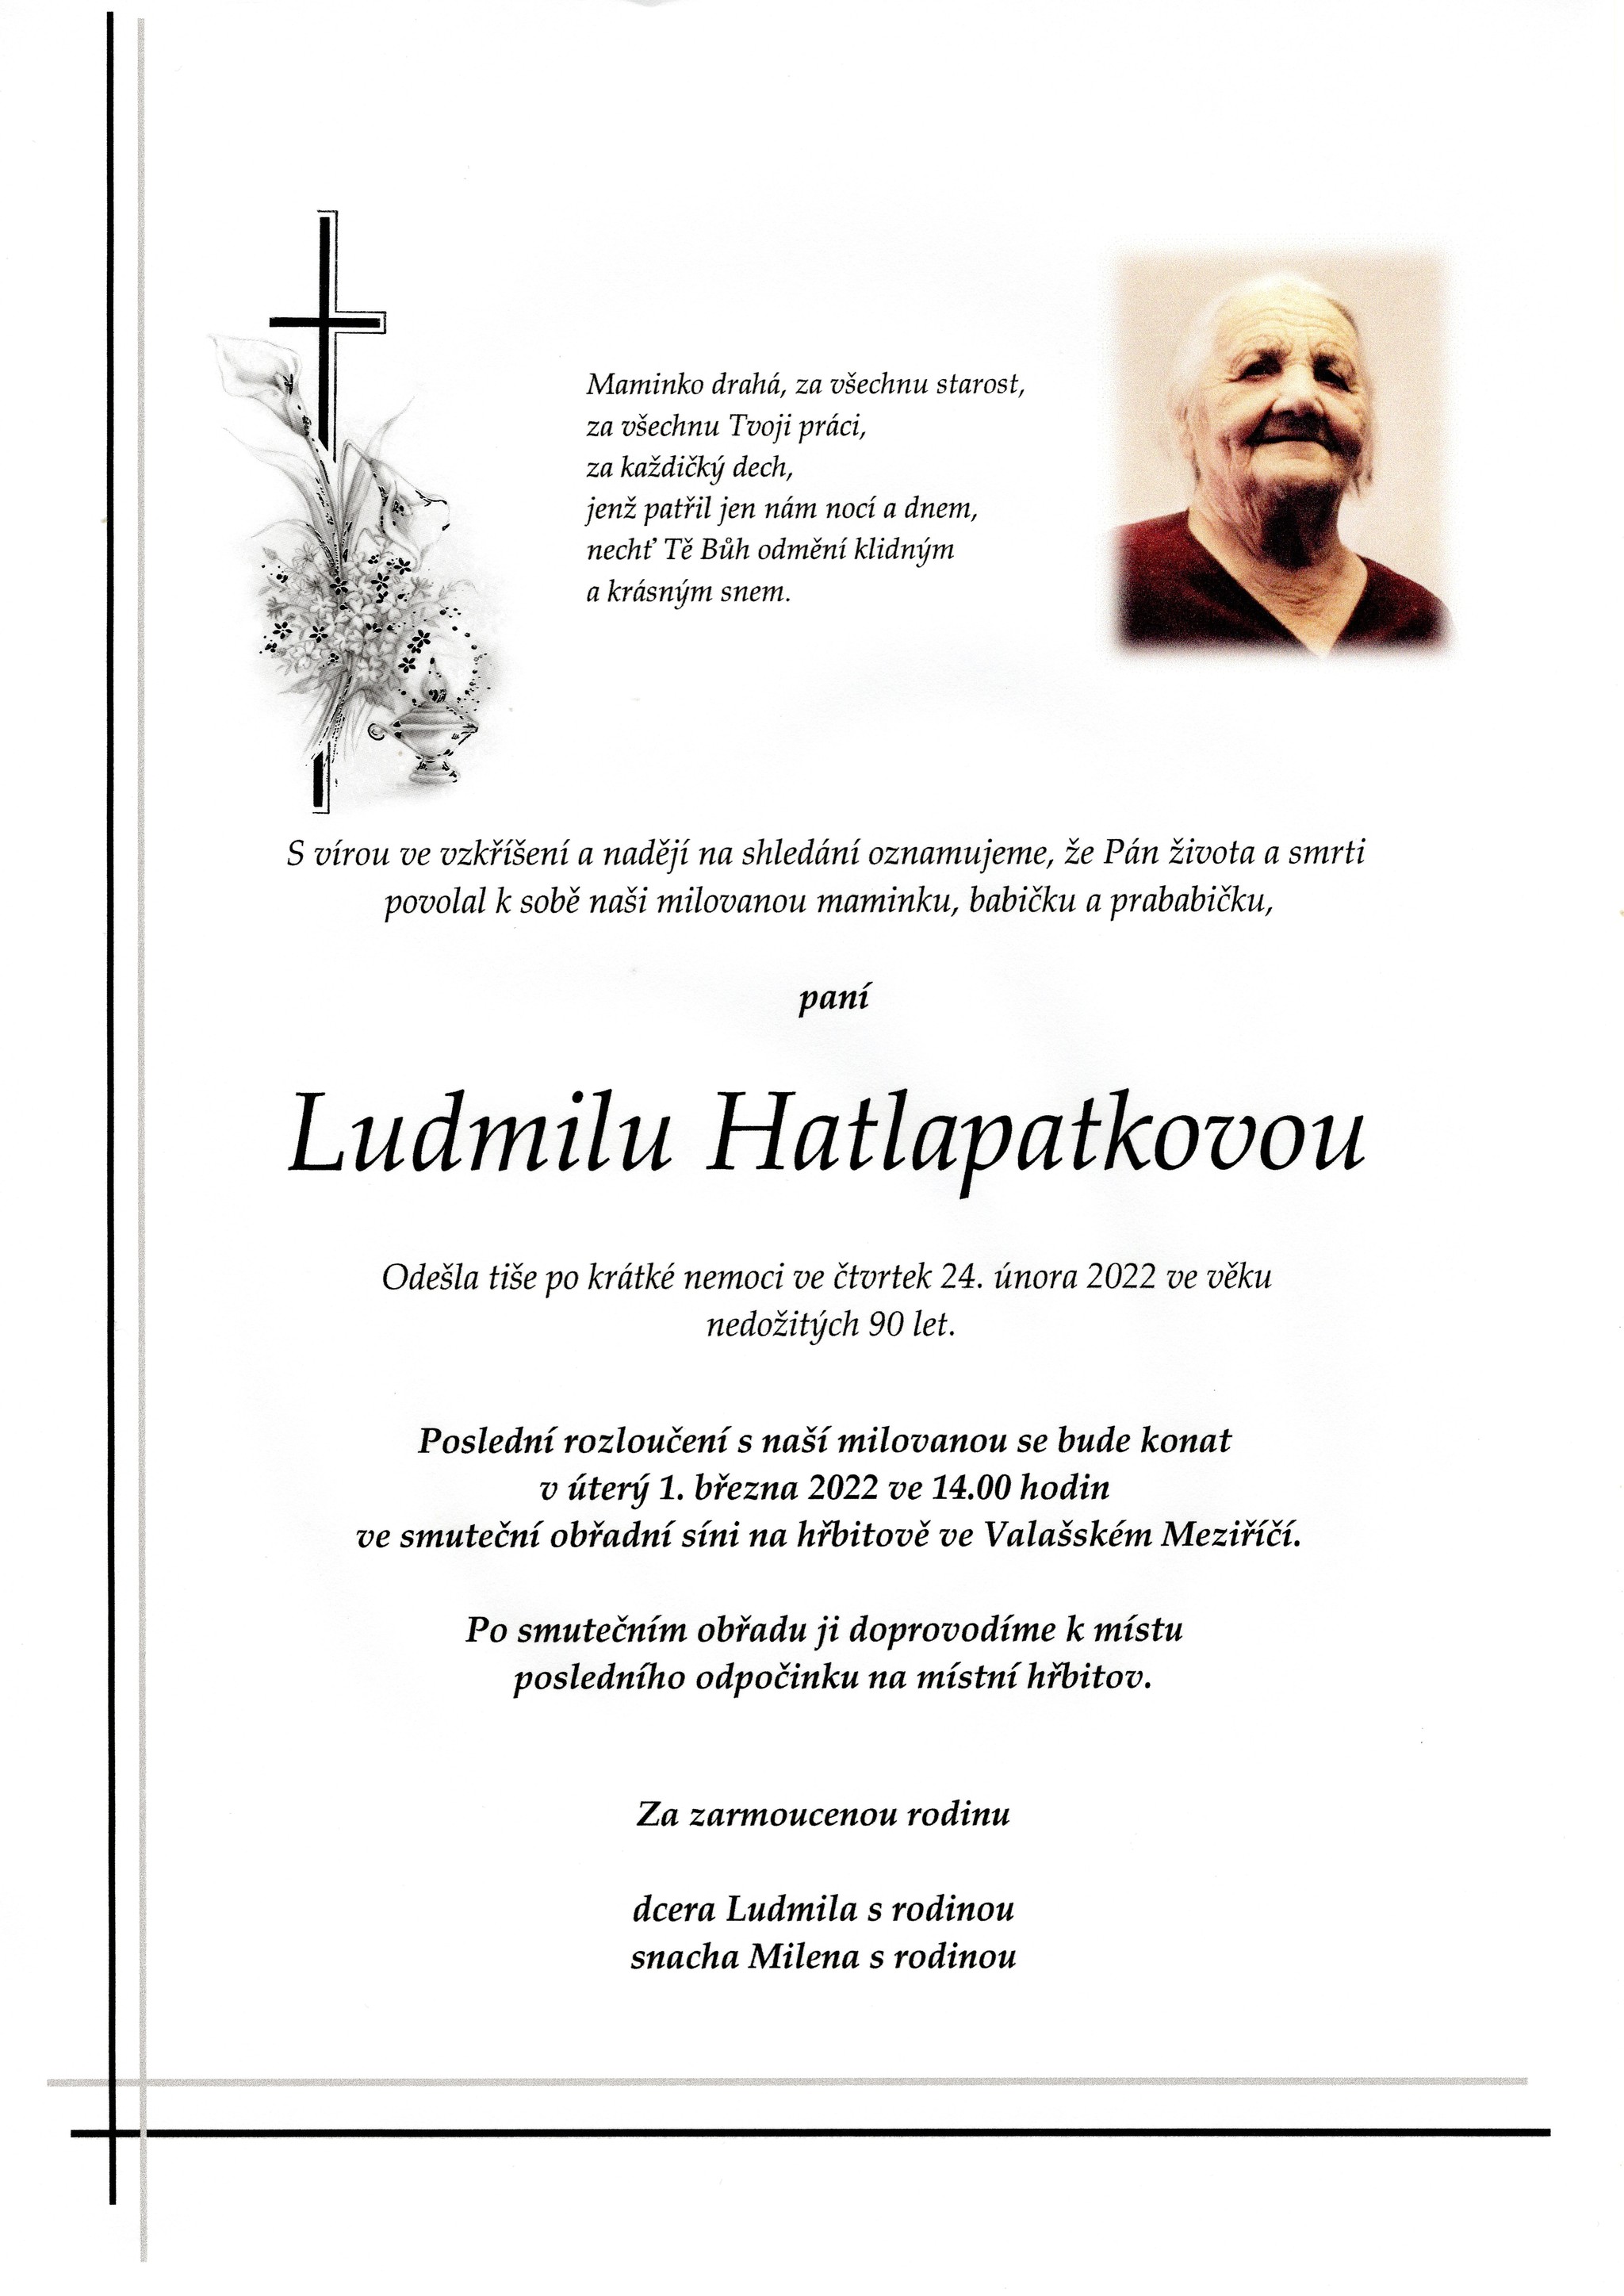 Ludmila Hatlapatková